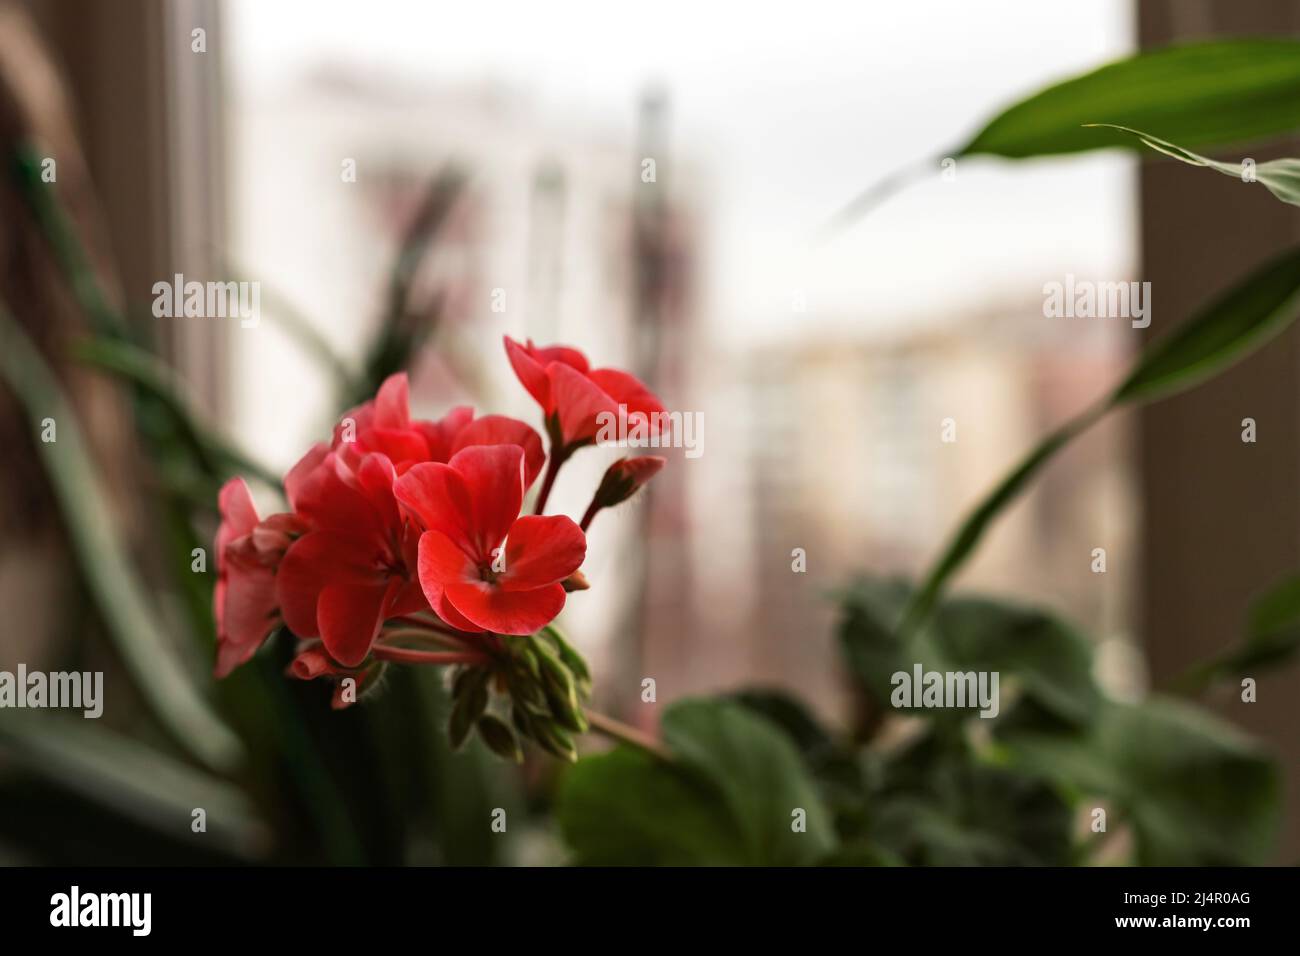 Flowering pink geranium pelargonium flower on window sill on city background among potted house plants Stock Photo